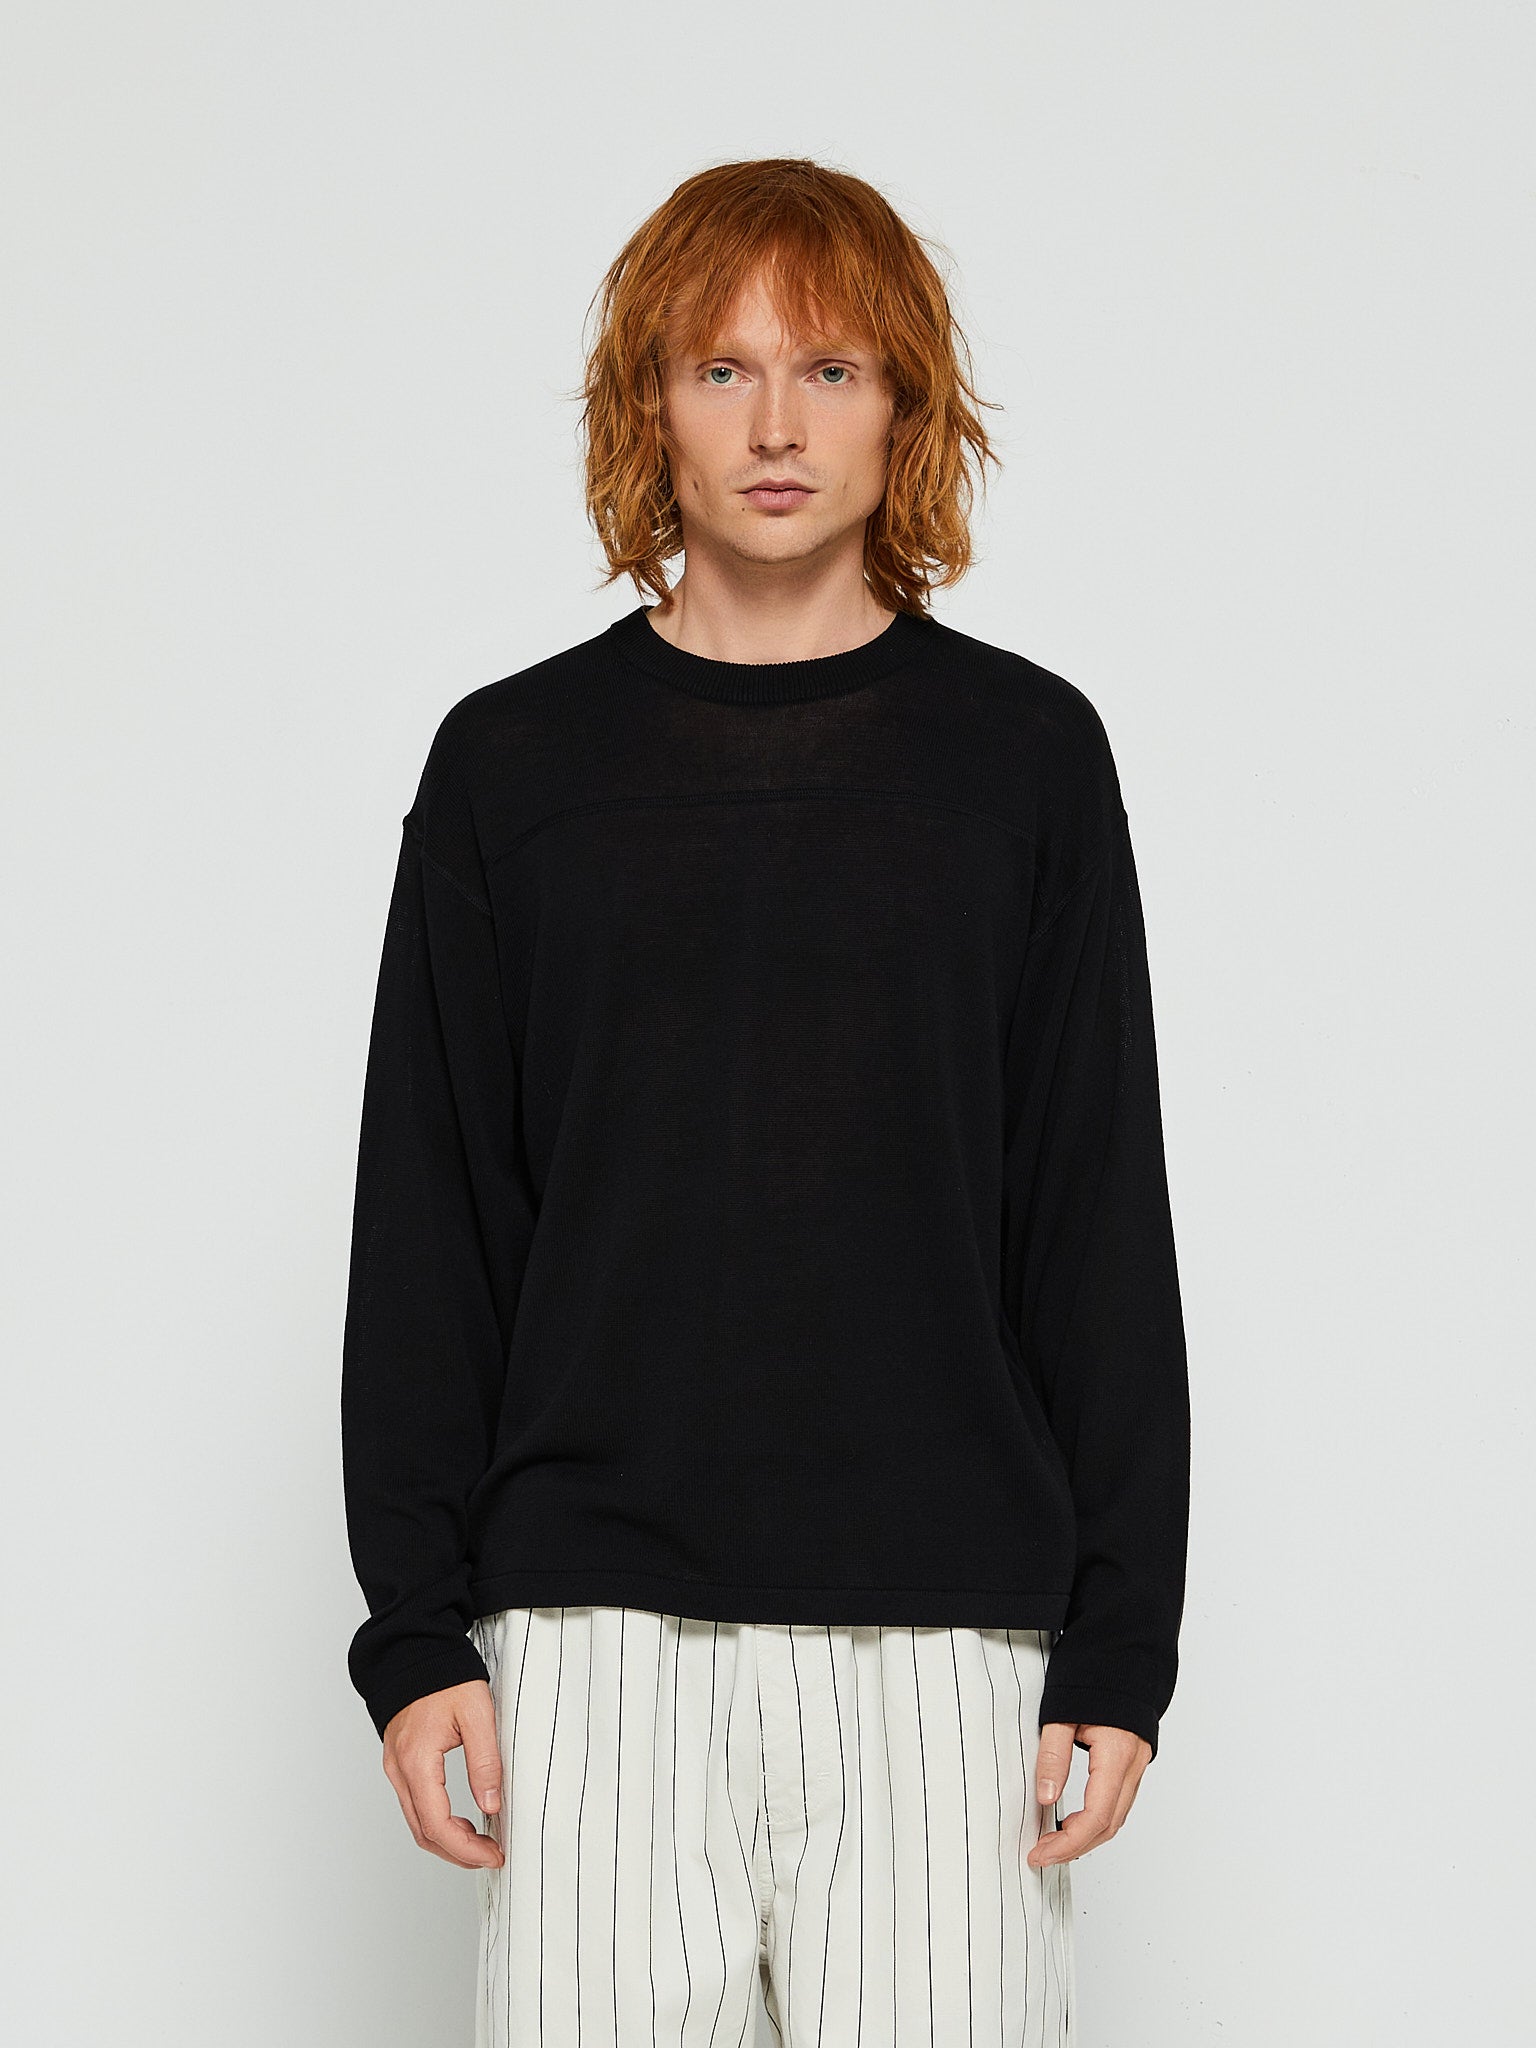 Stüssy - Football Sweater in Black